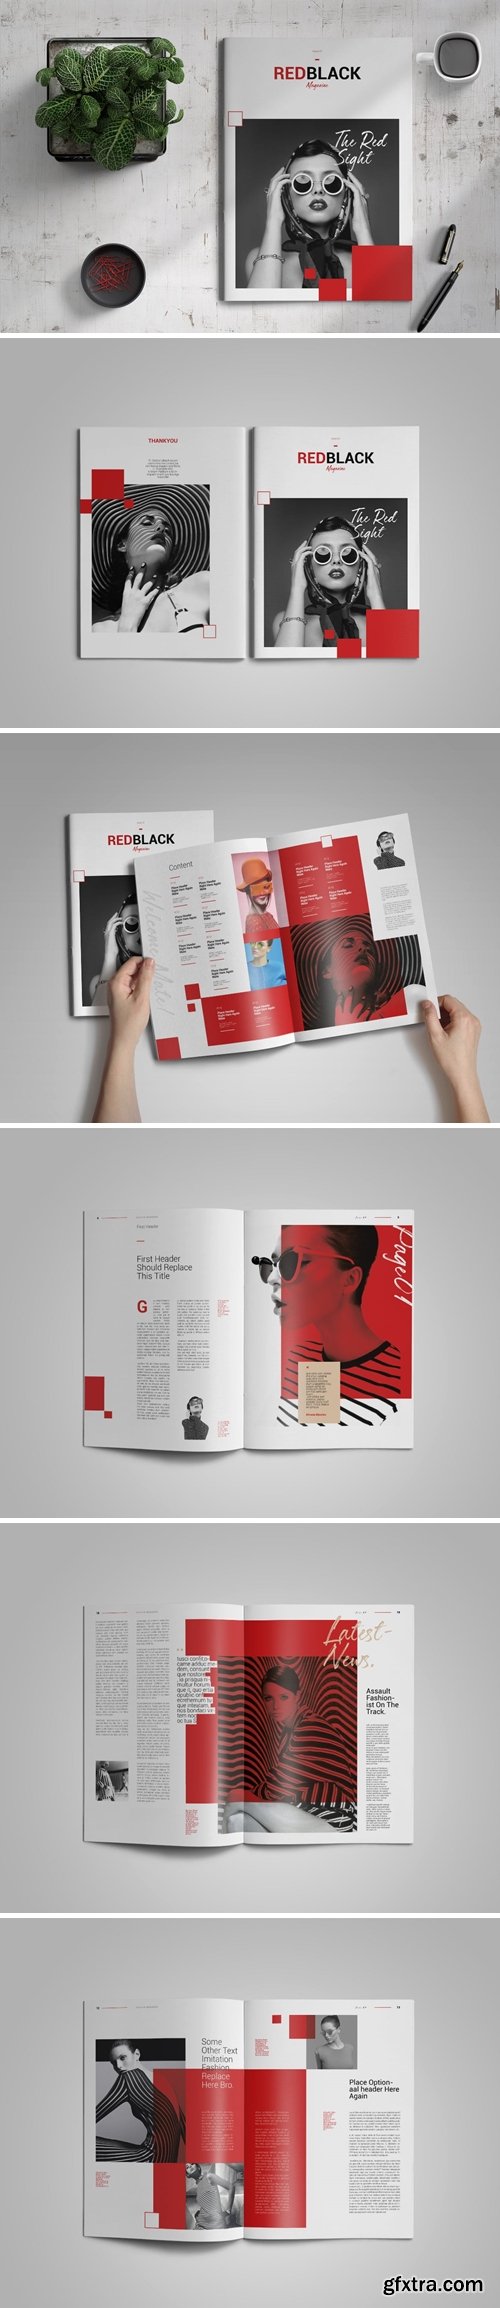 Redblack | Magazine template